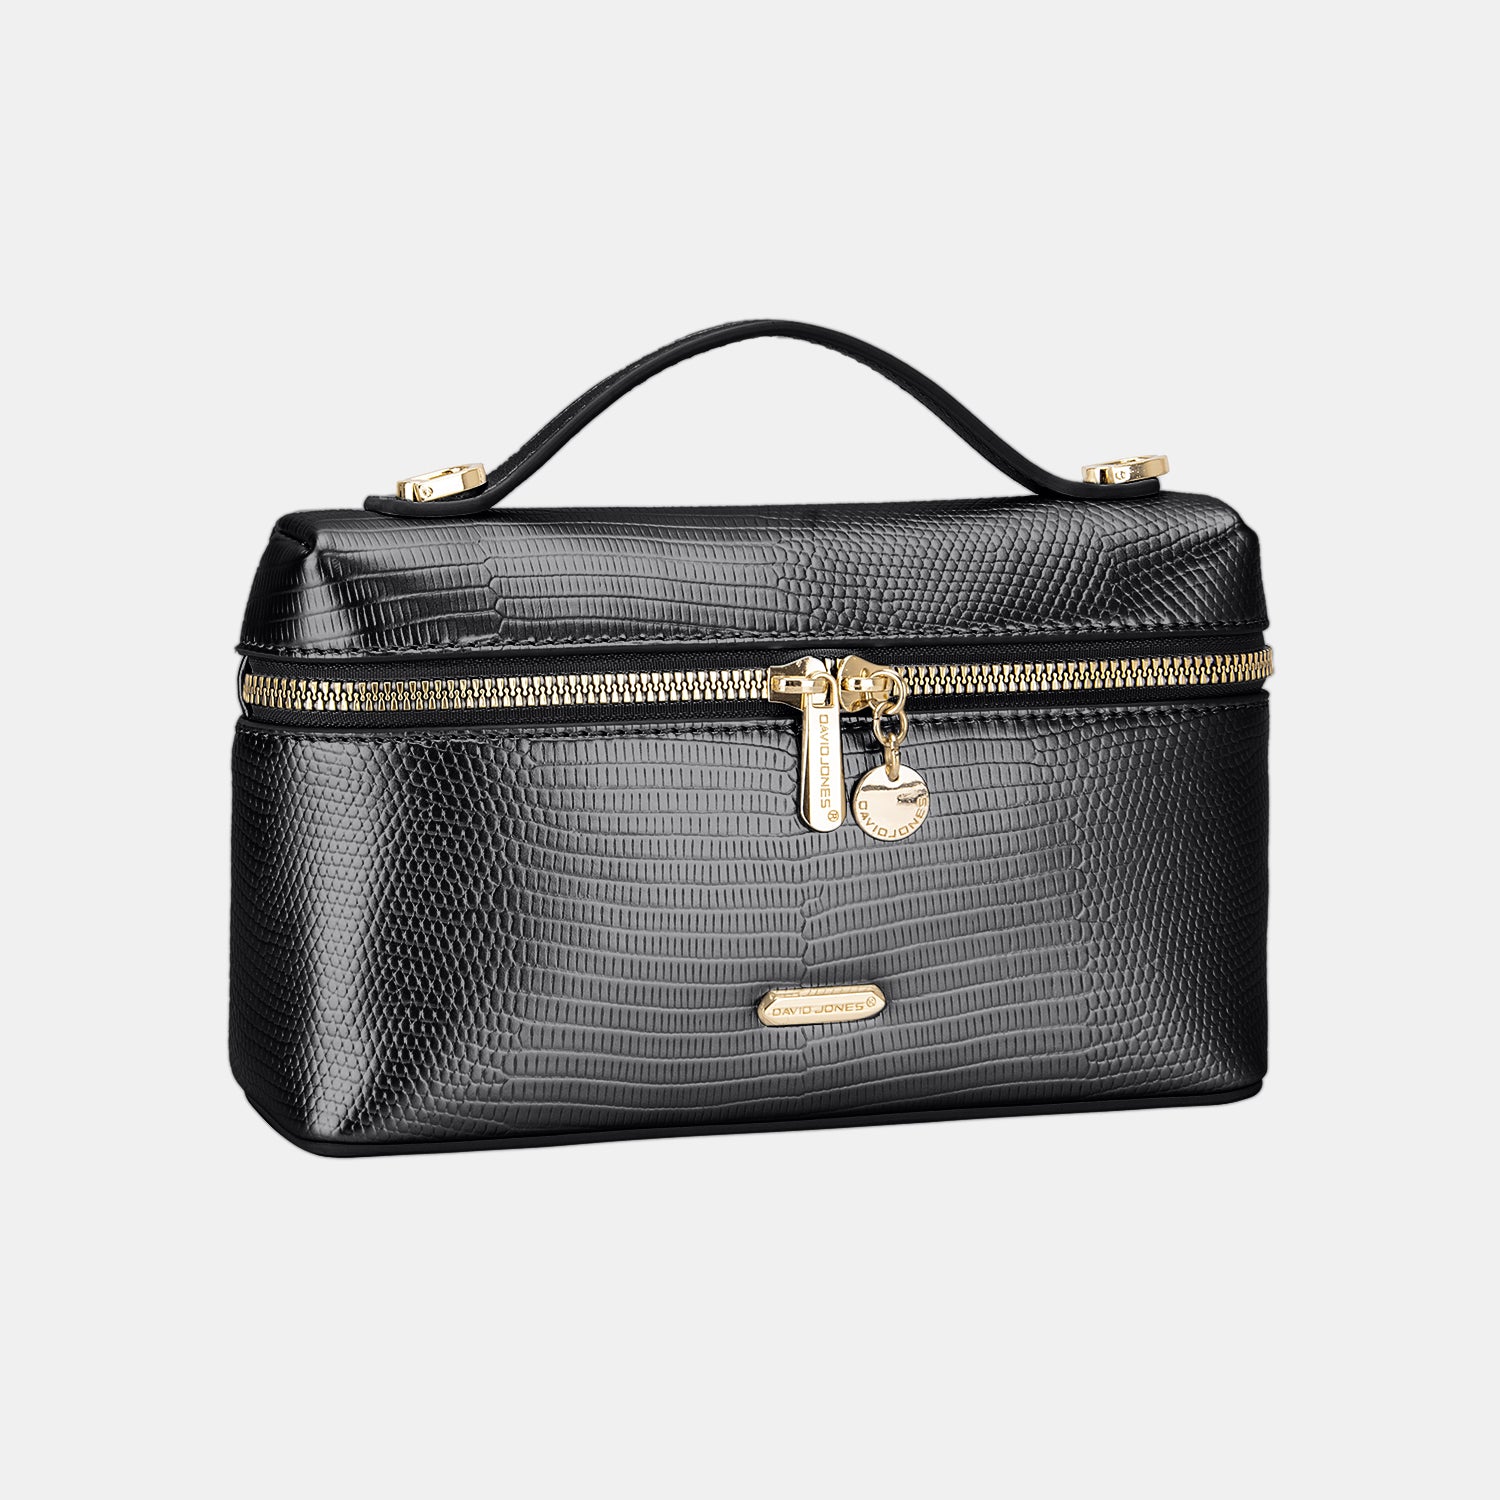 David Jones Texture PU Leather Handbag Black One Size 